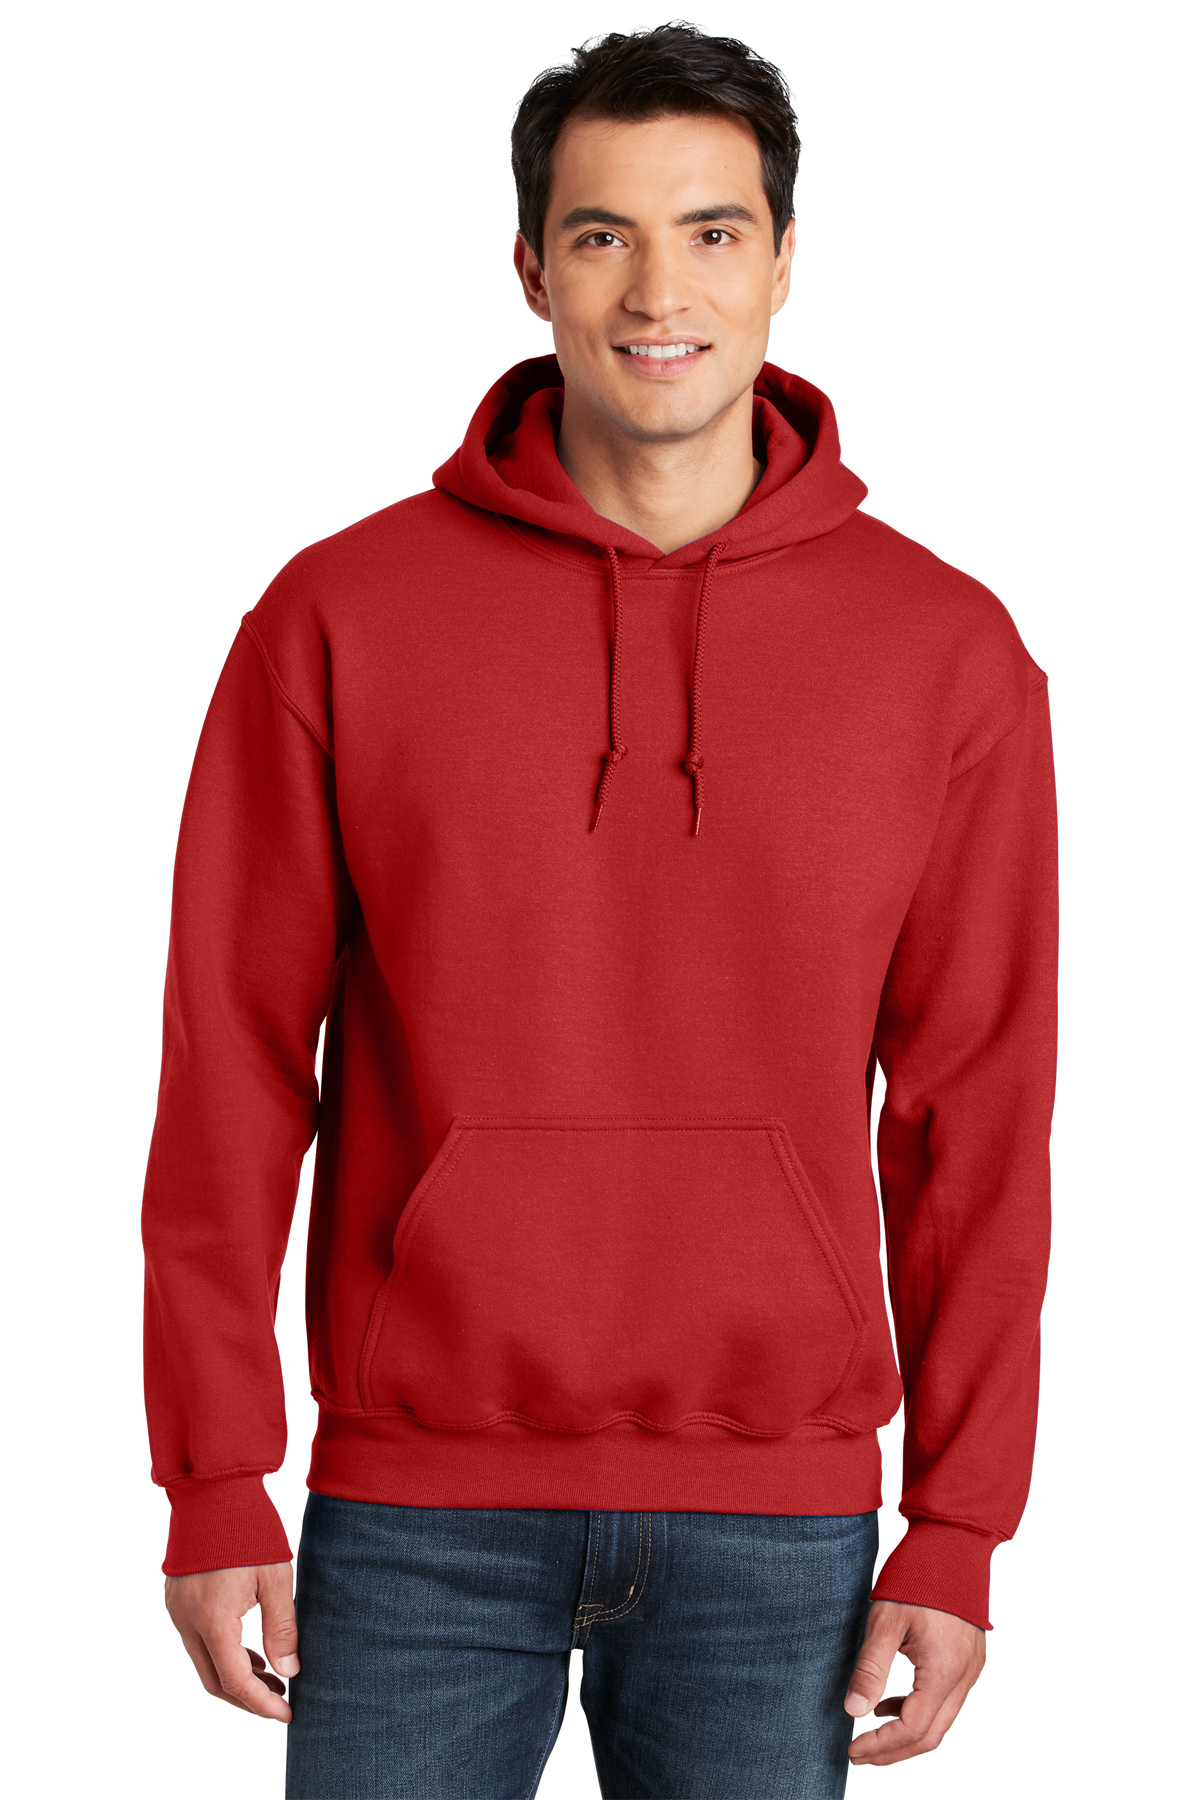 Gildan - Hooded | DryBlend Product Sweatshirt Pullover SanMar 